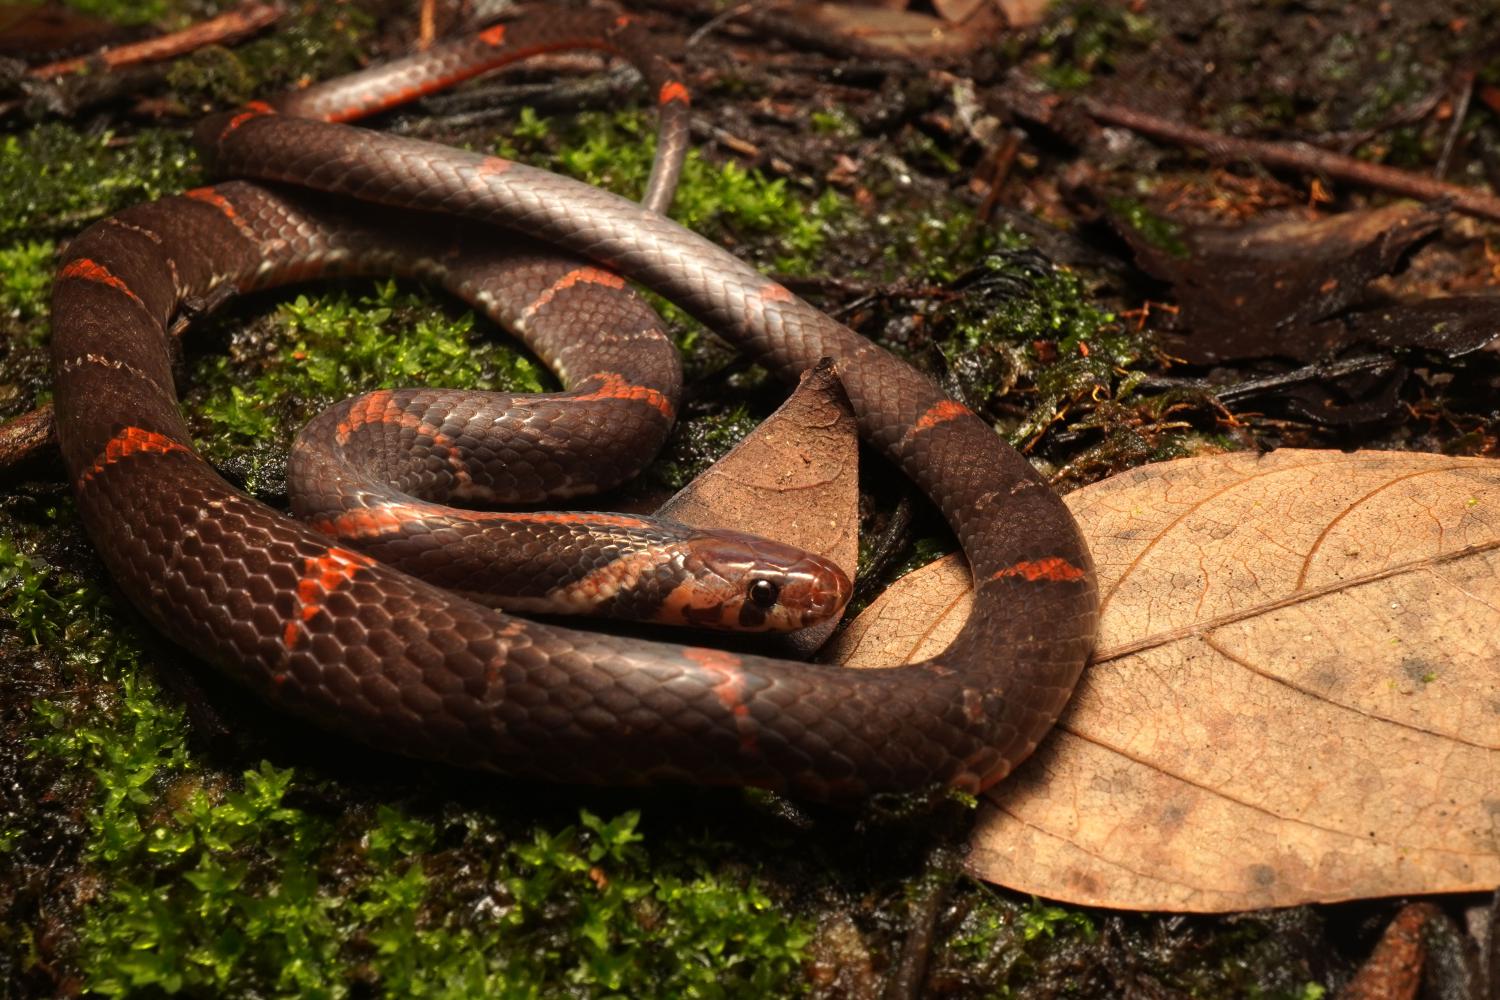 15-astounding-facts-about-barred-kukri-snake